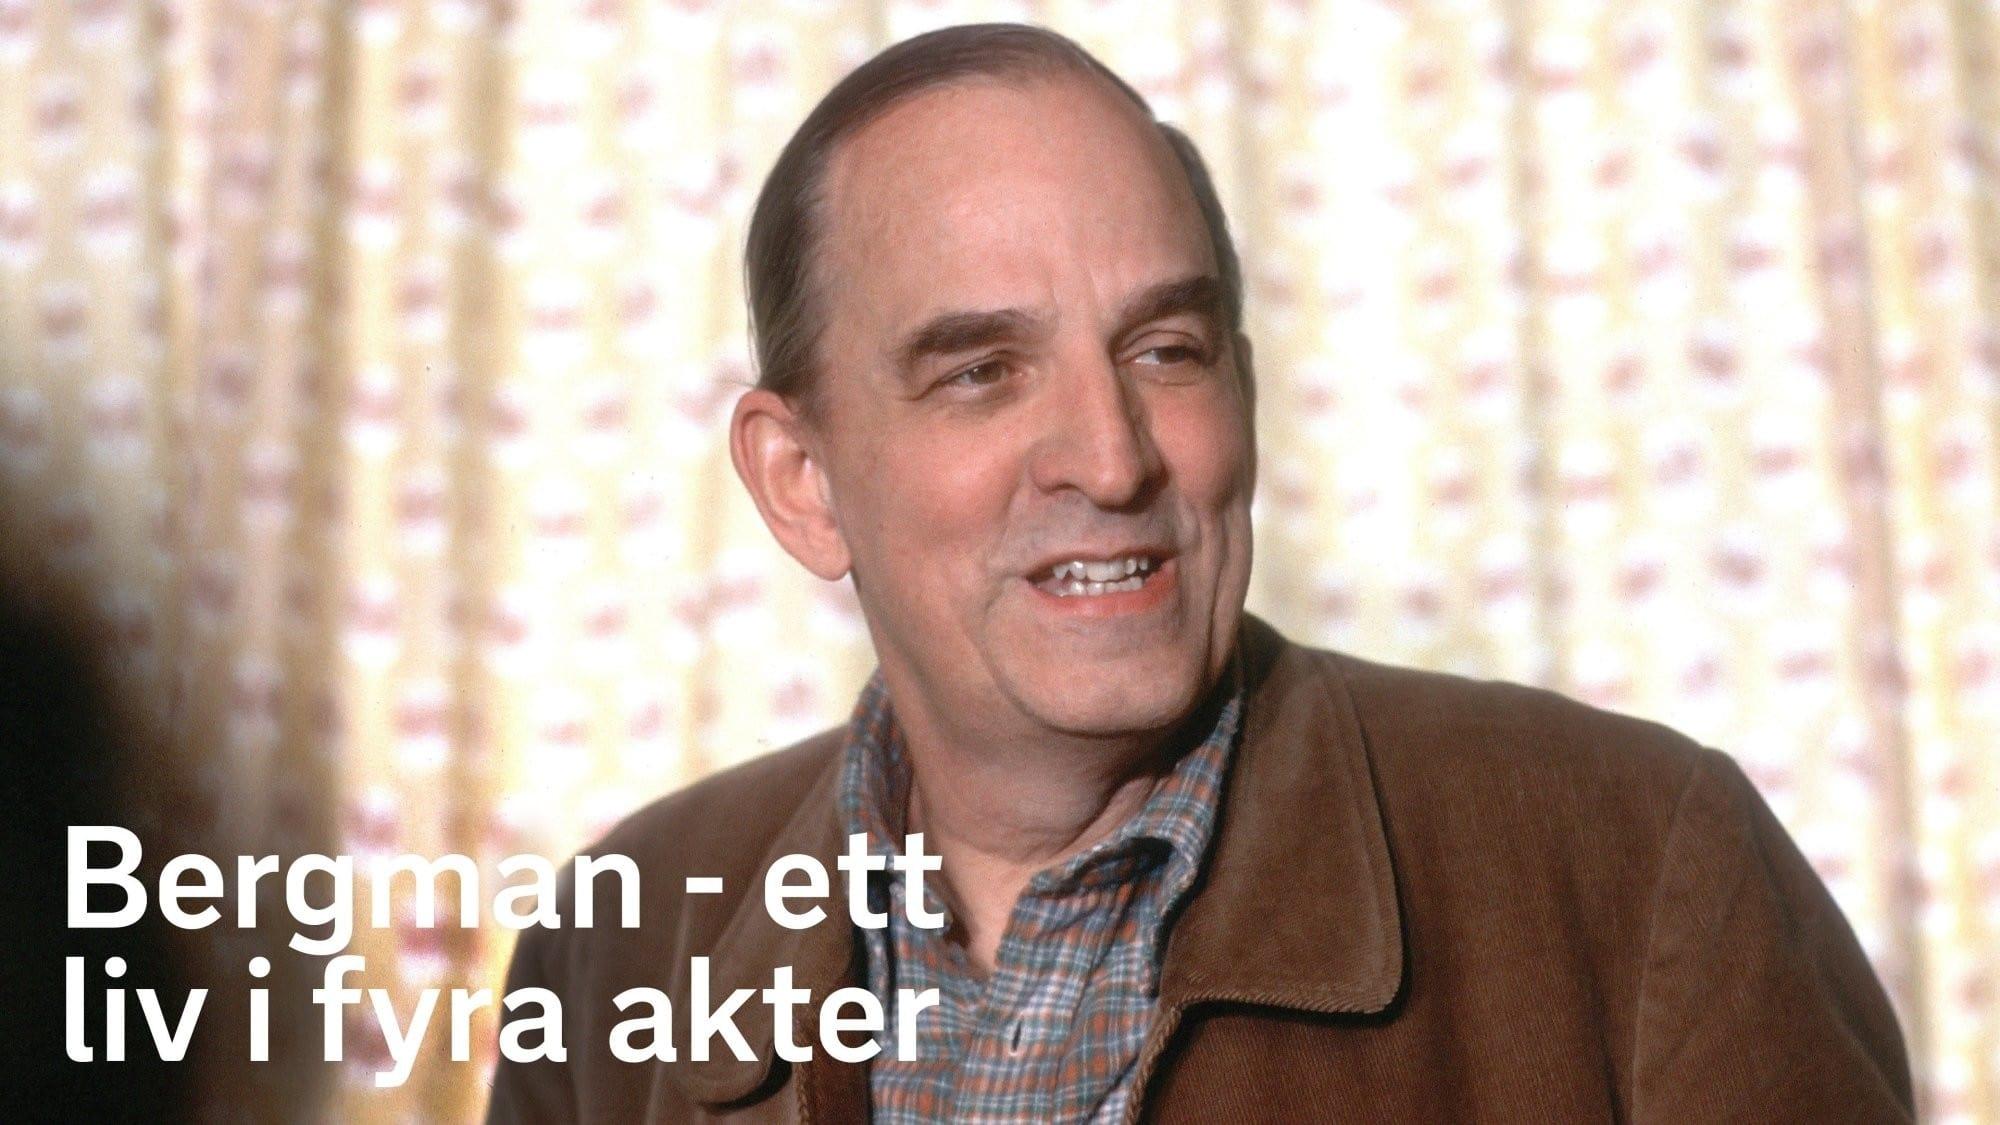 Bergman - ett liv i fyra akter backdrop